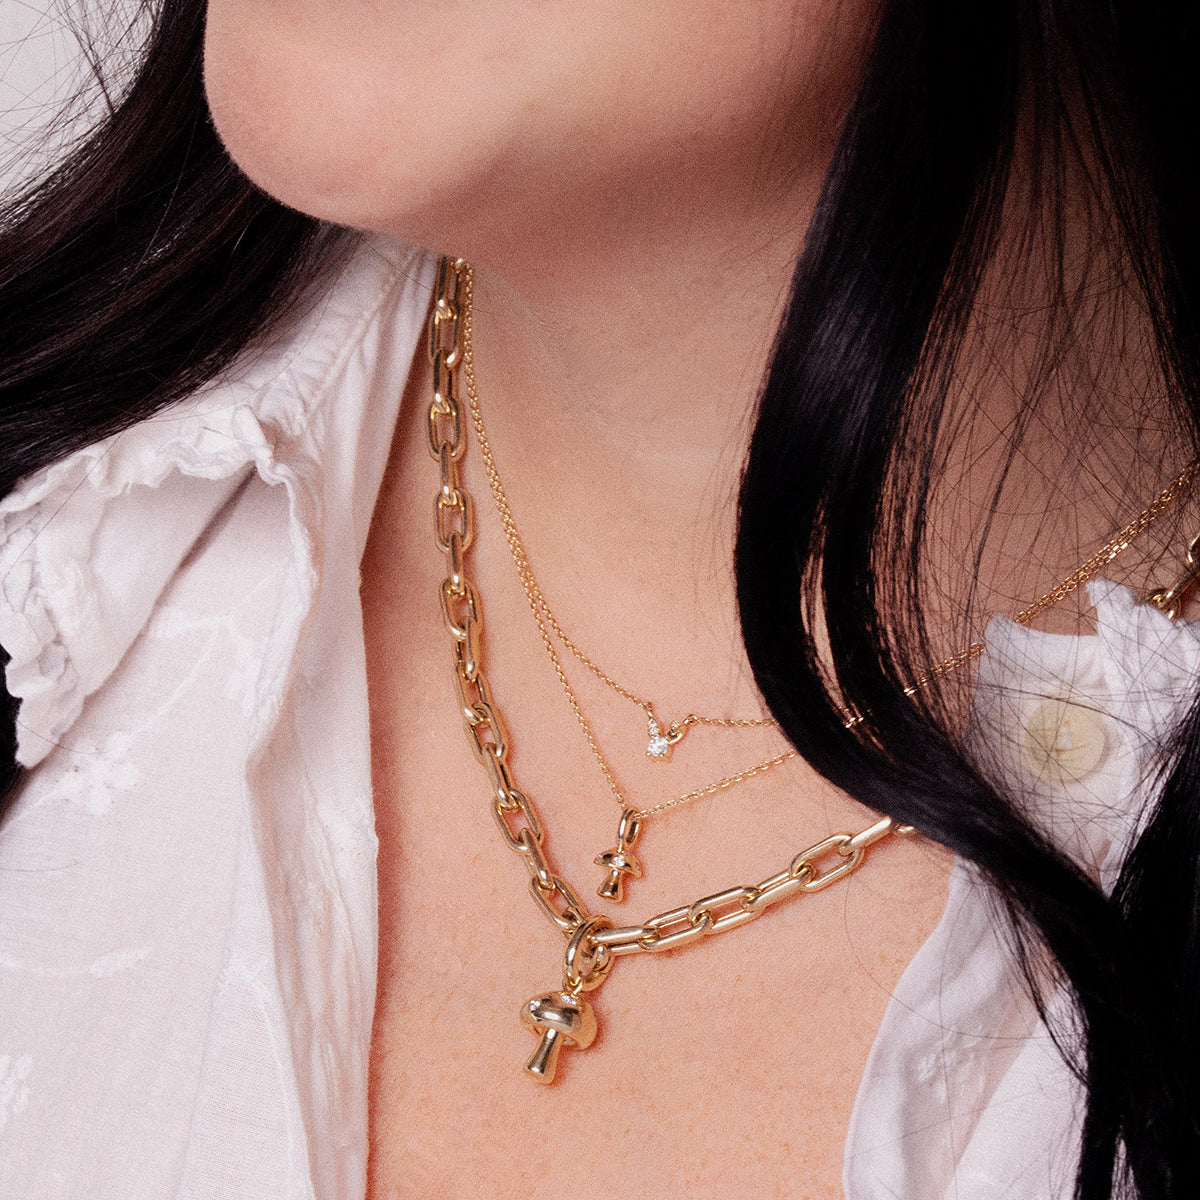 5.3mm Italian Chain Link Necklace - Adina Reyter